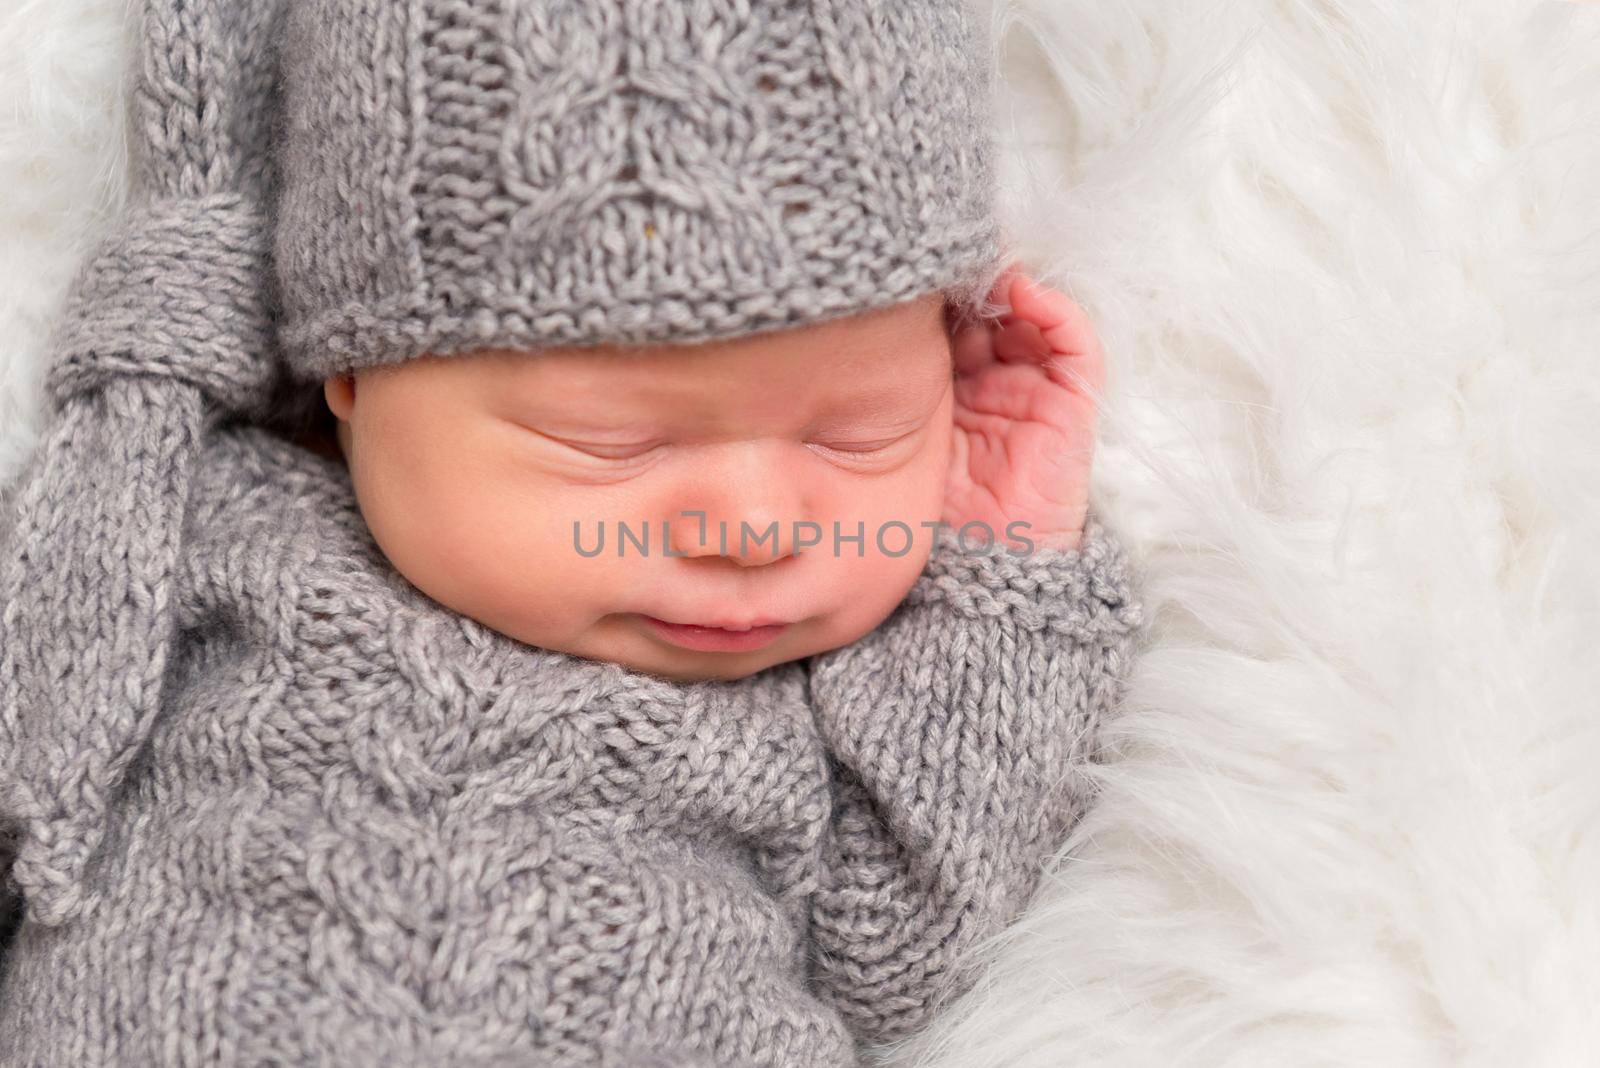 Child enveloped in a gray blanket, closeup by tan4ikk1